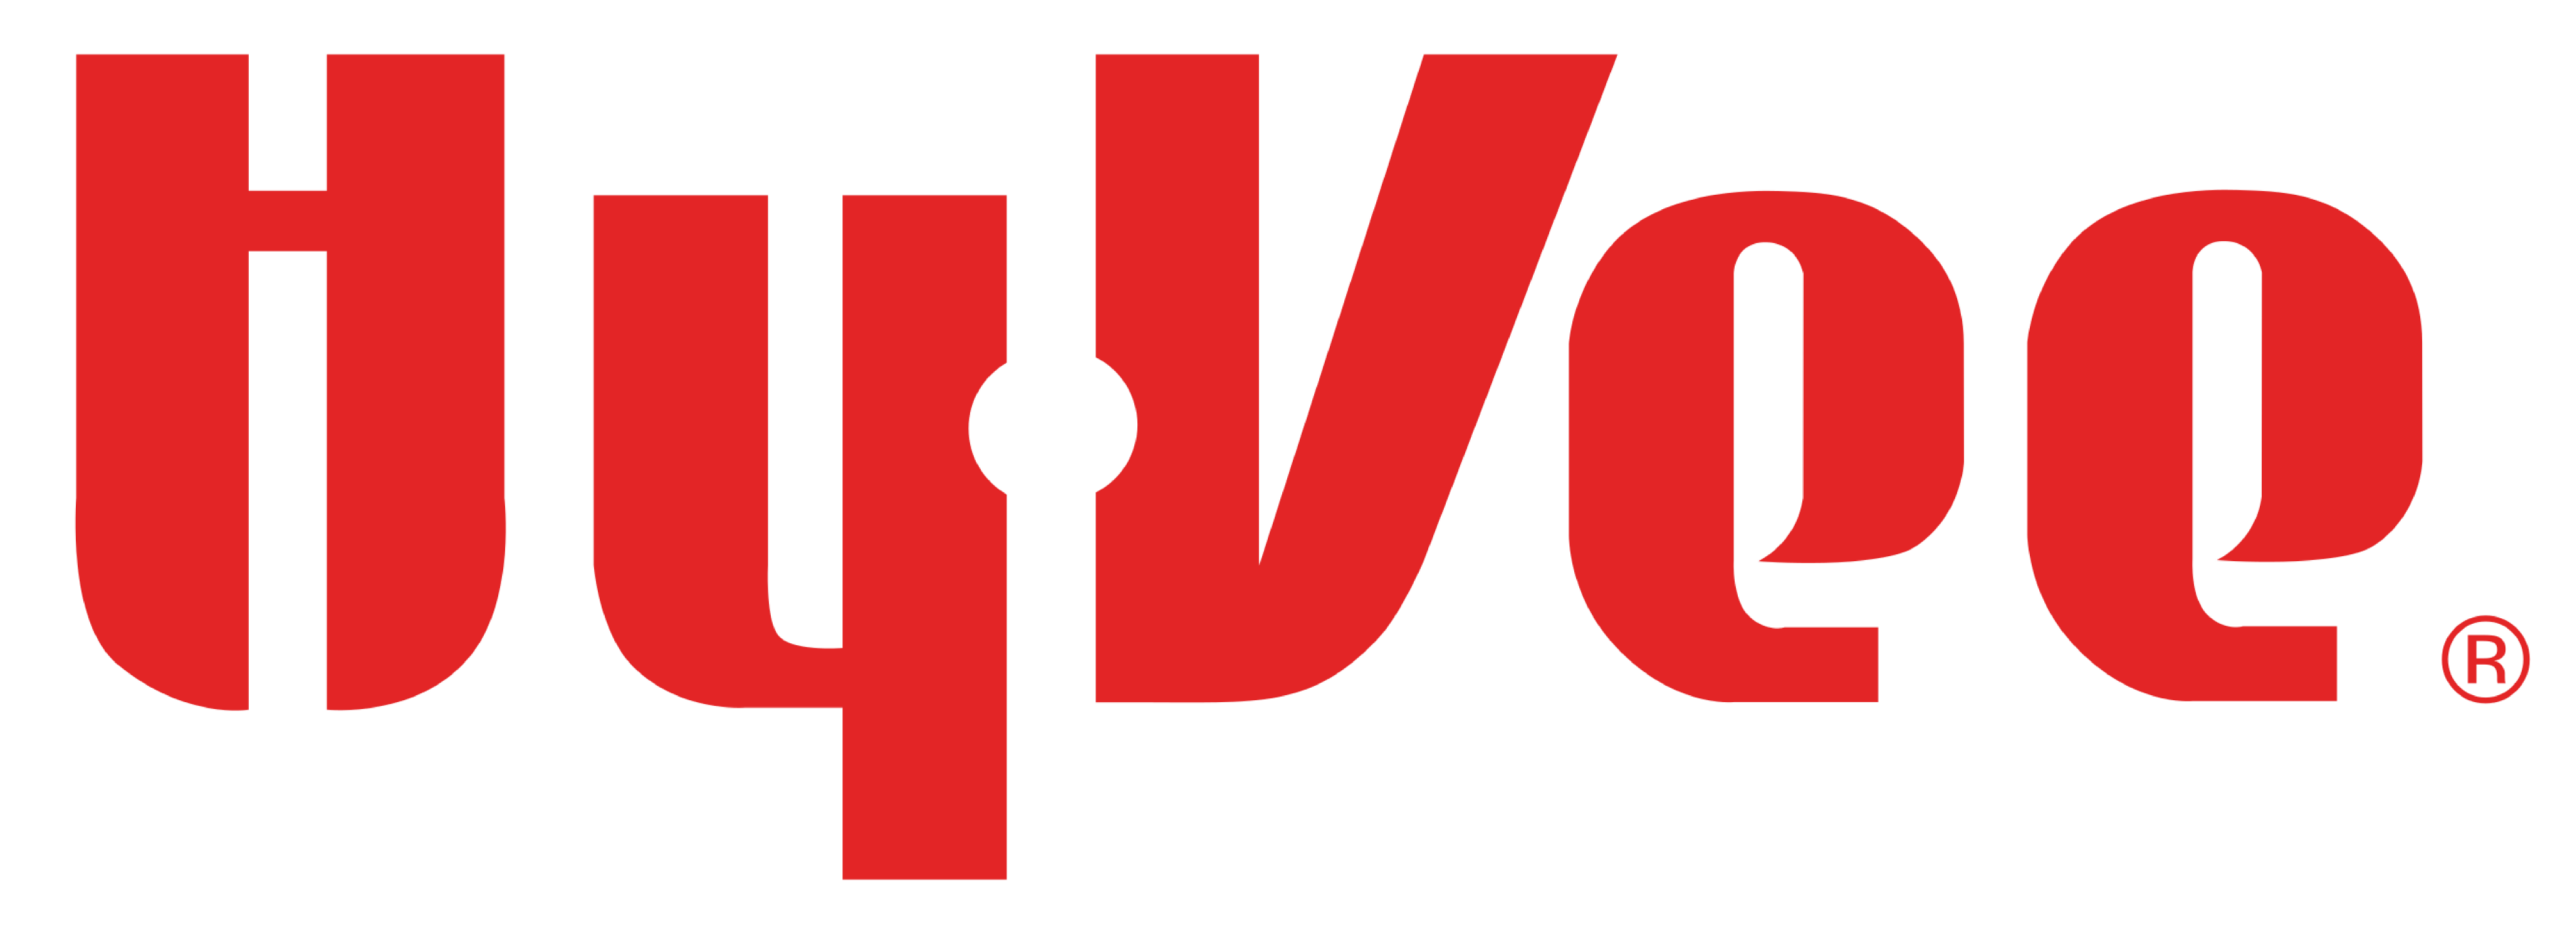 Hy-Vee logo logo